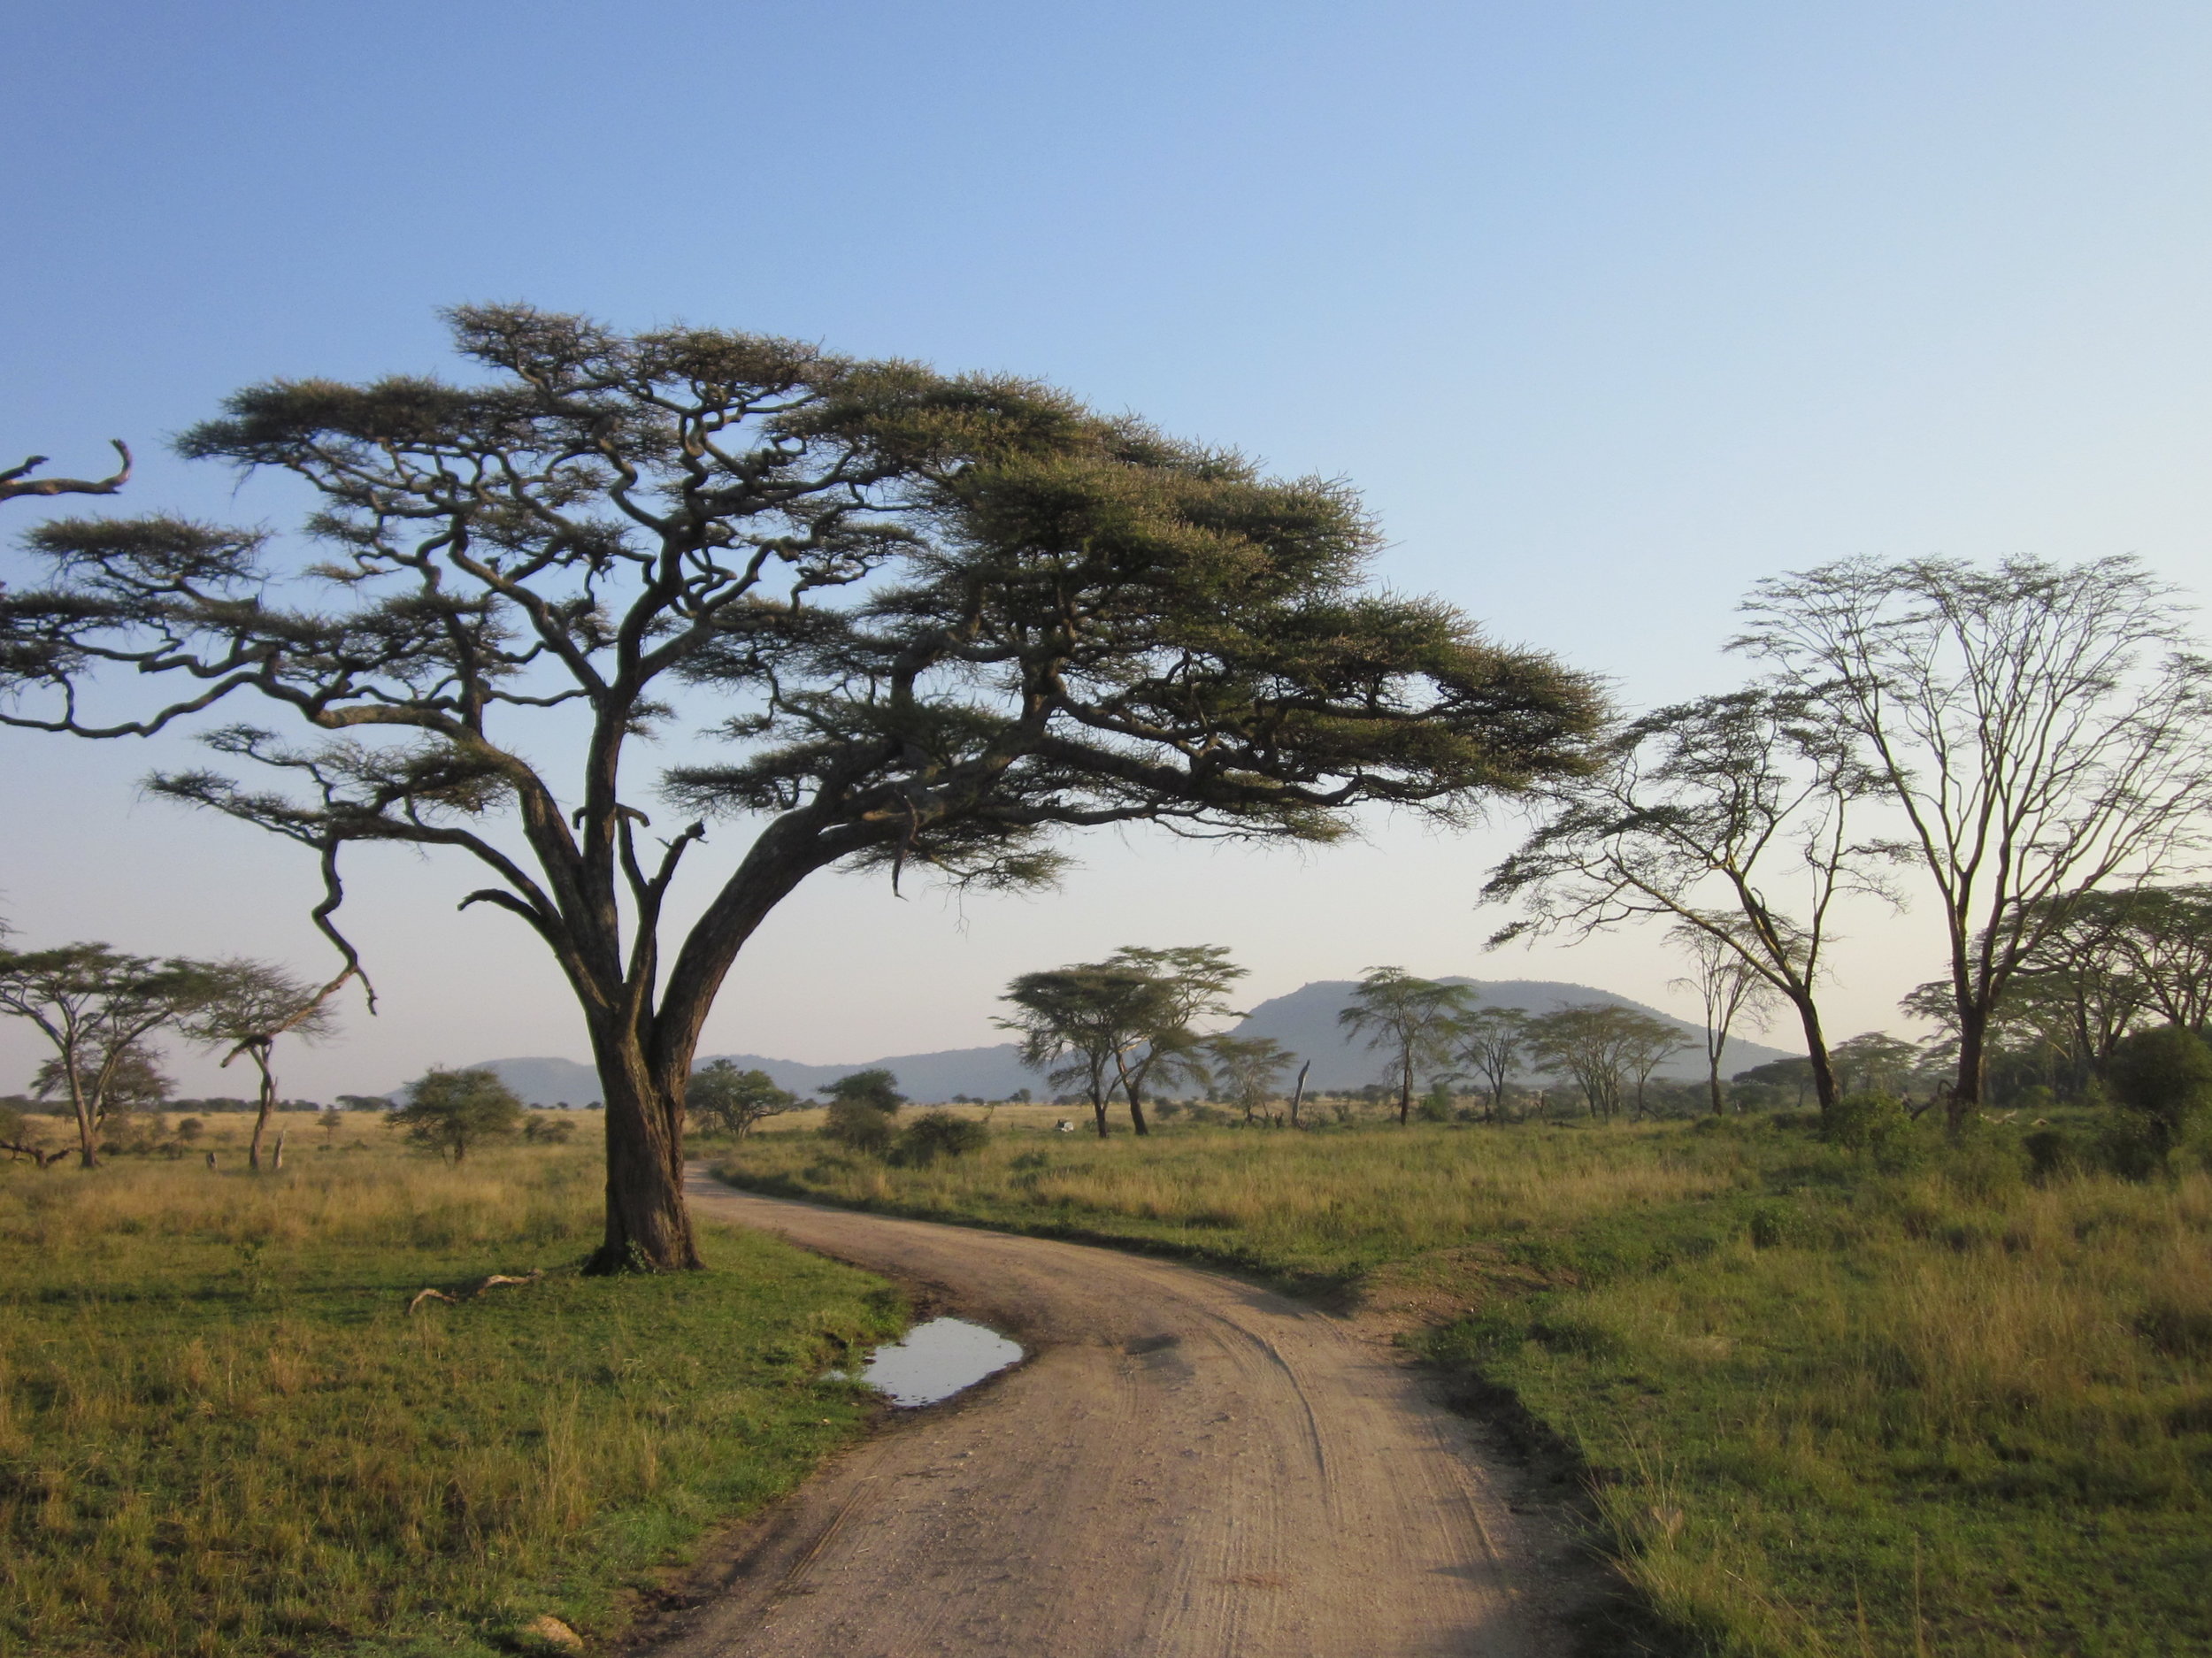 Road through the Serengeti